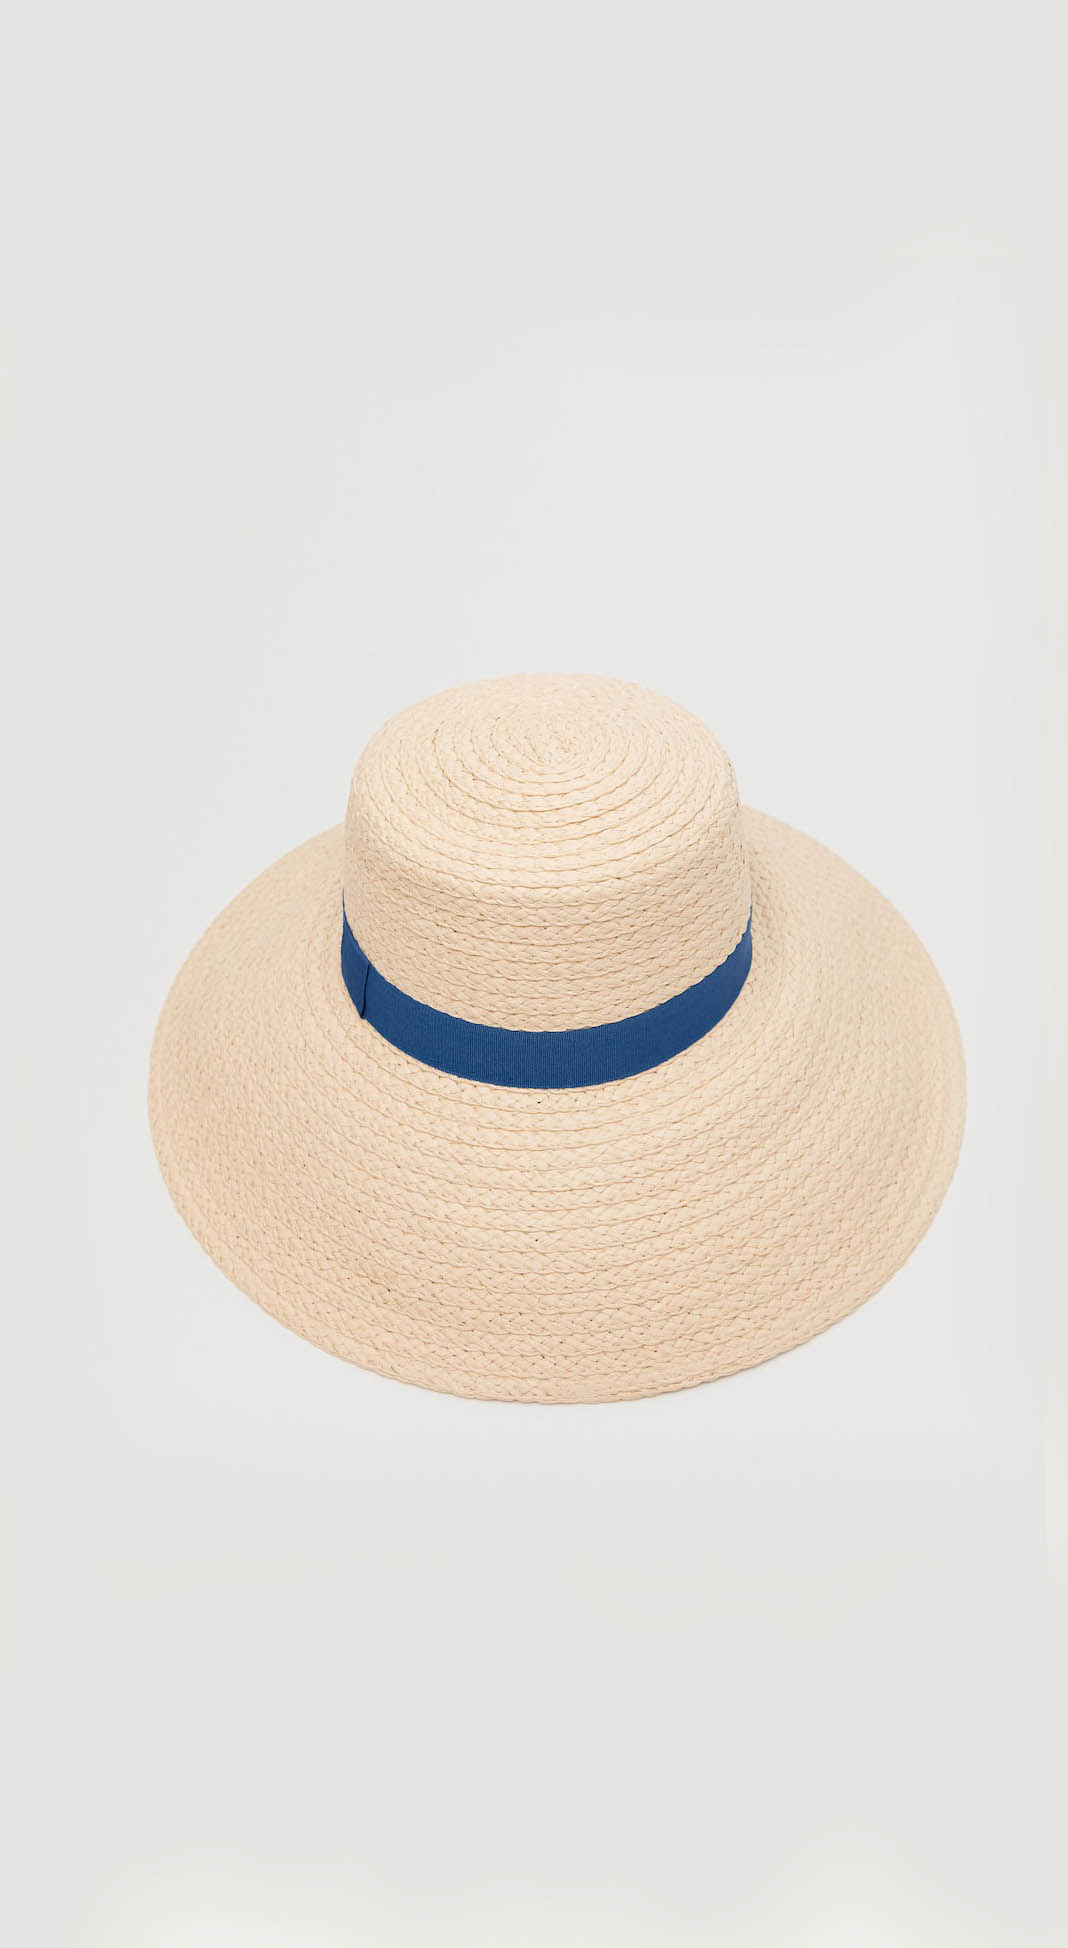 Sombrero pamela de rafia de Mango 29,99 euros